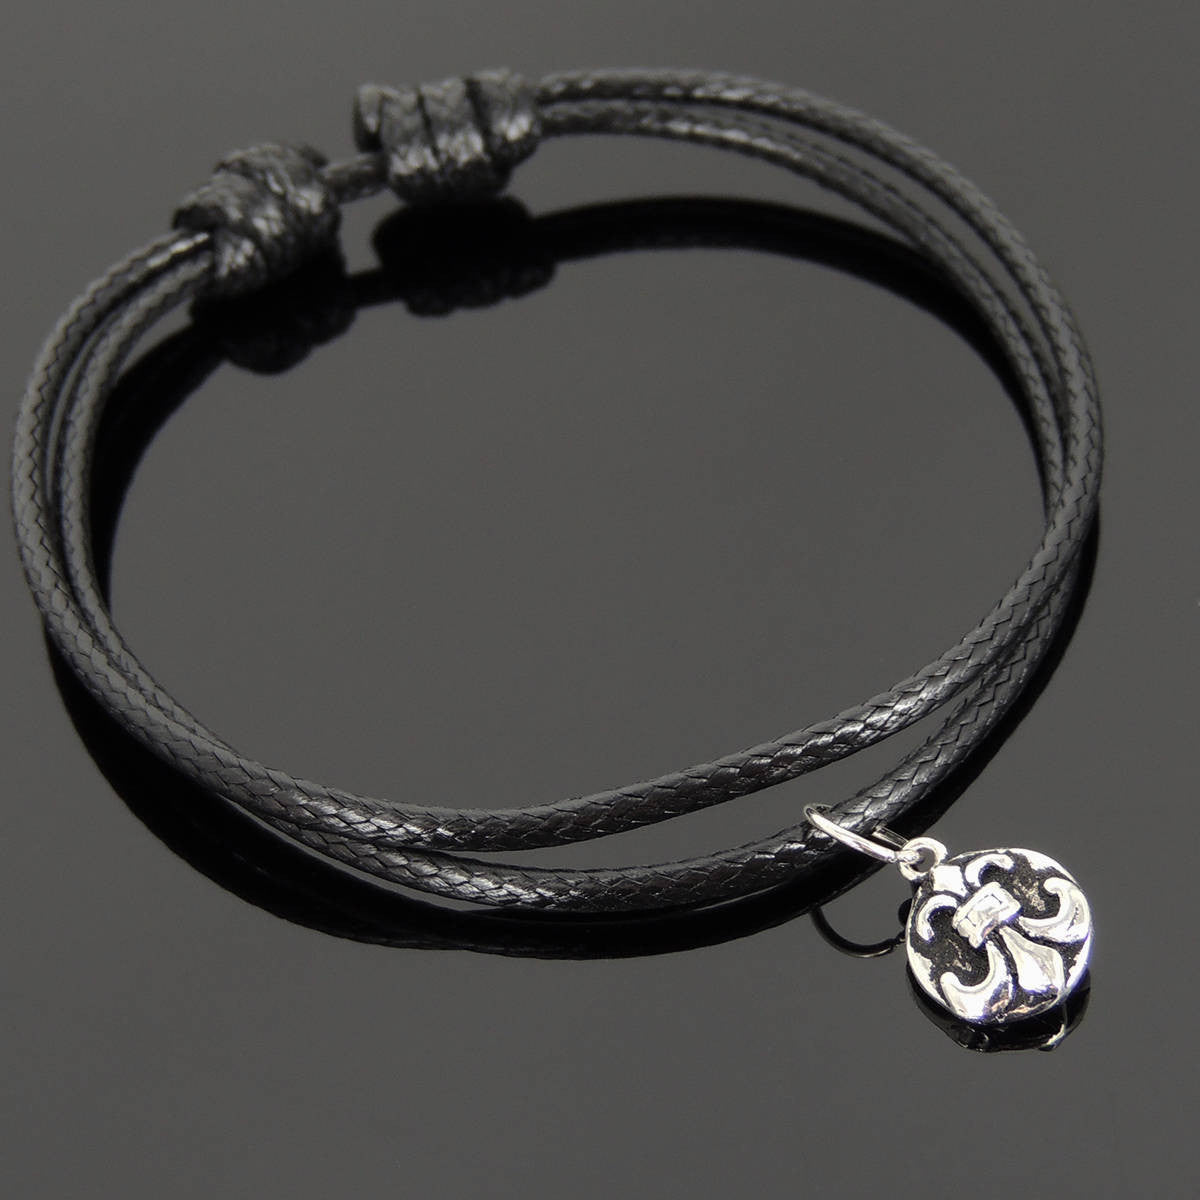 Adjustable Wax Rope Bracelet with S925 Sterling Silver Round Vintage Fleur de Lis Pendant for Positive Healing Energy - Handmade by Gem & Silver BR1127